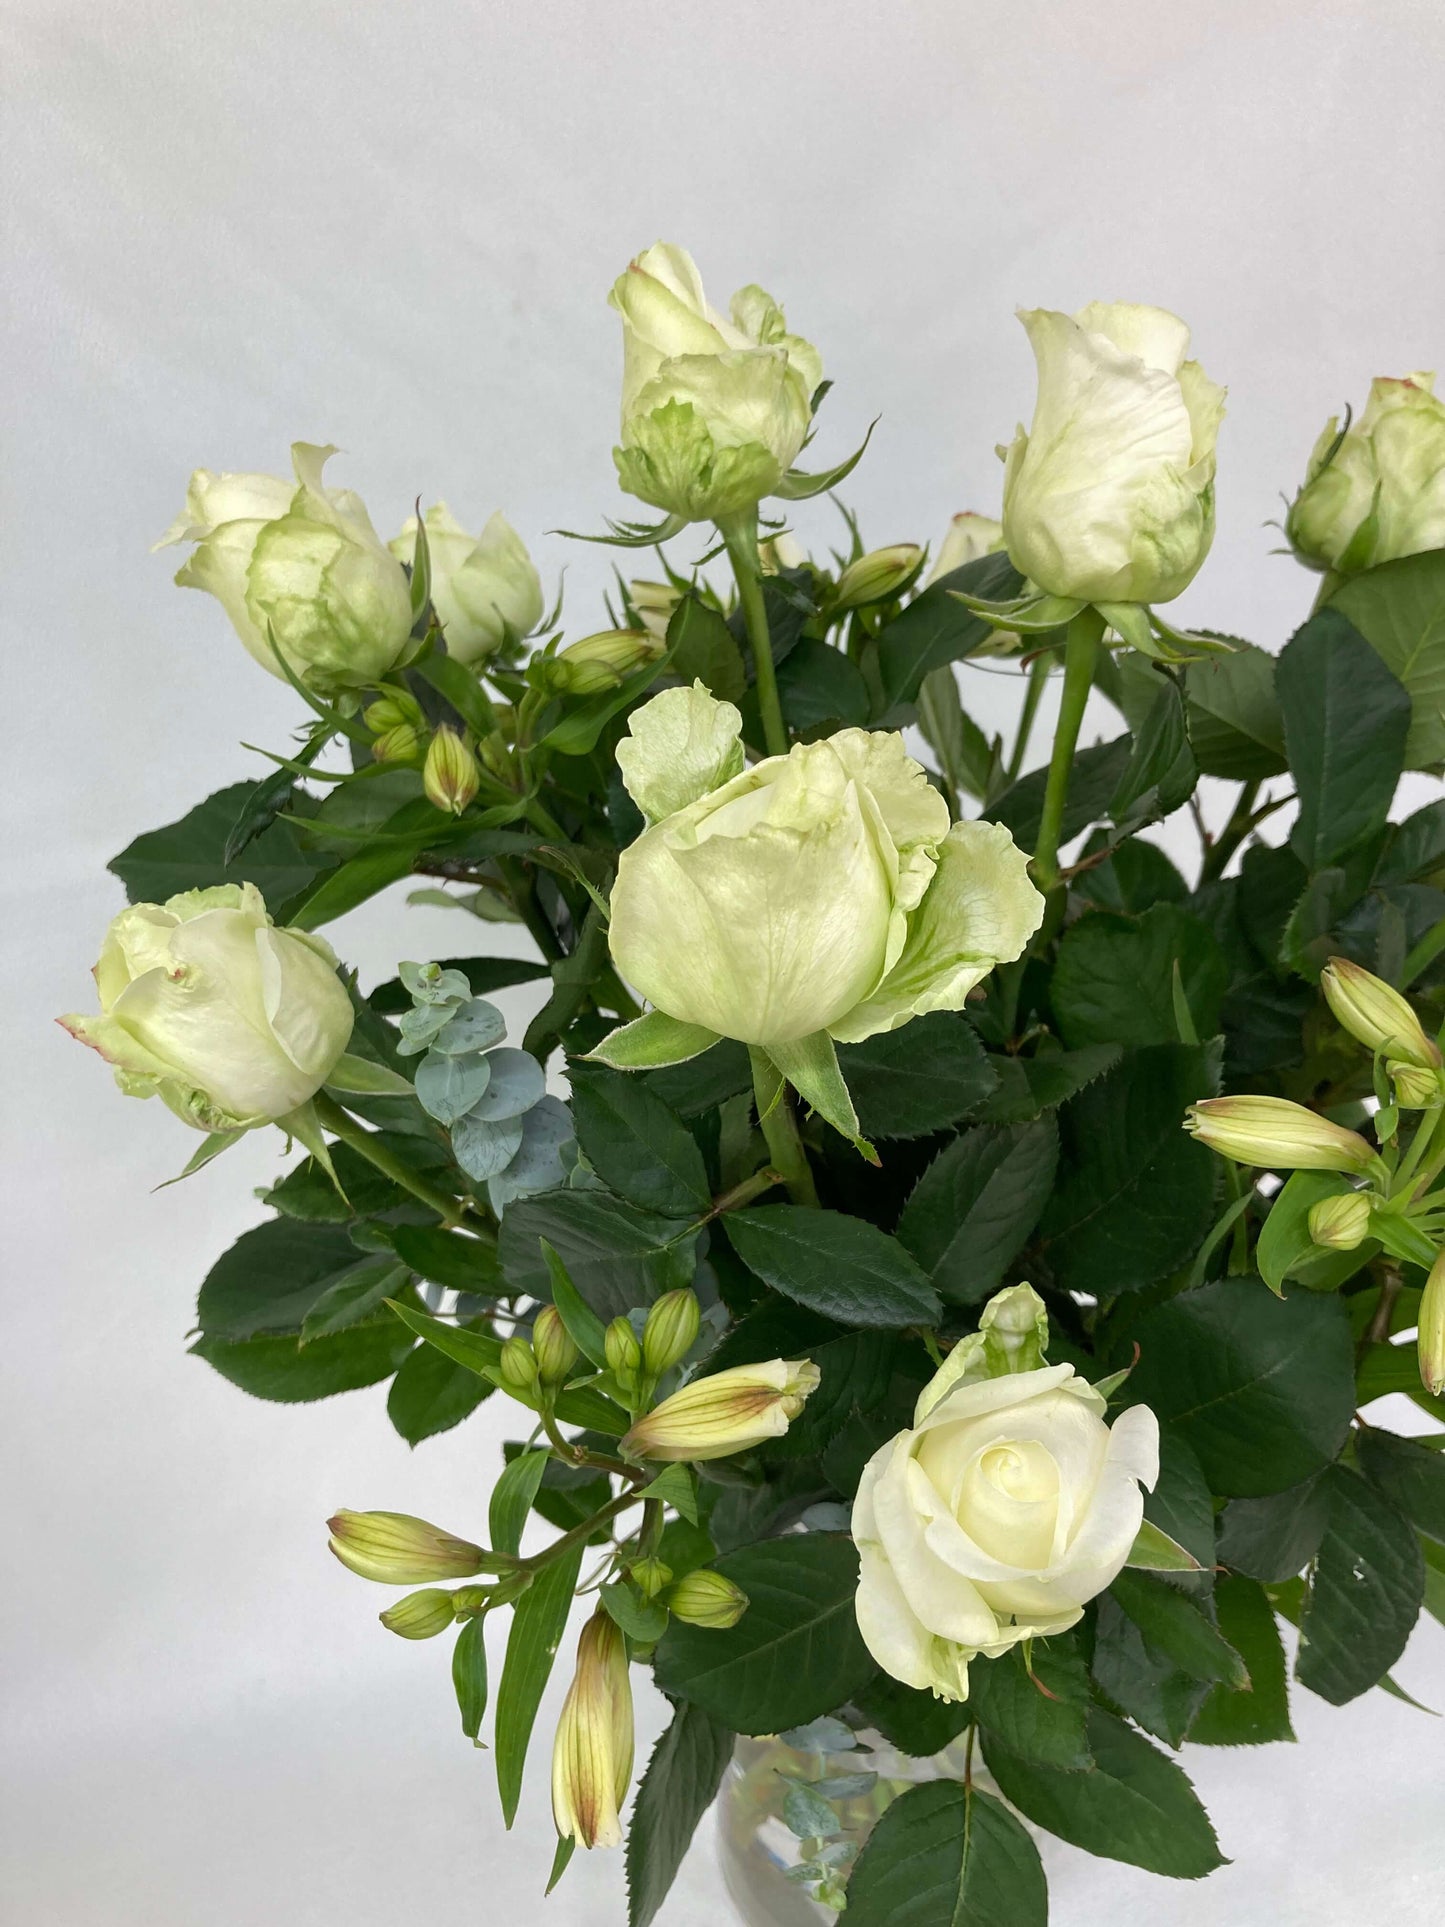 Dozen white roses up close. 